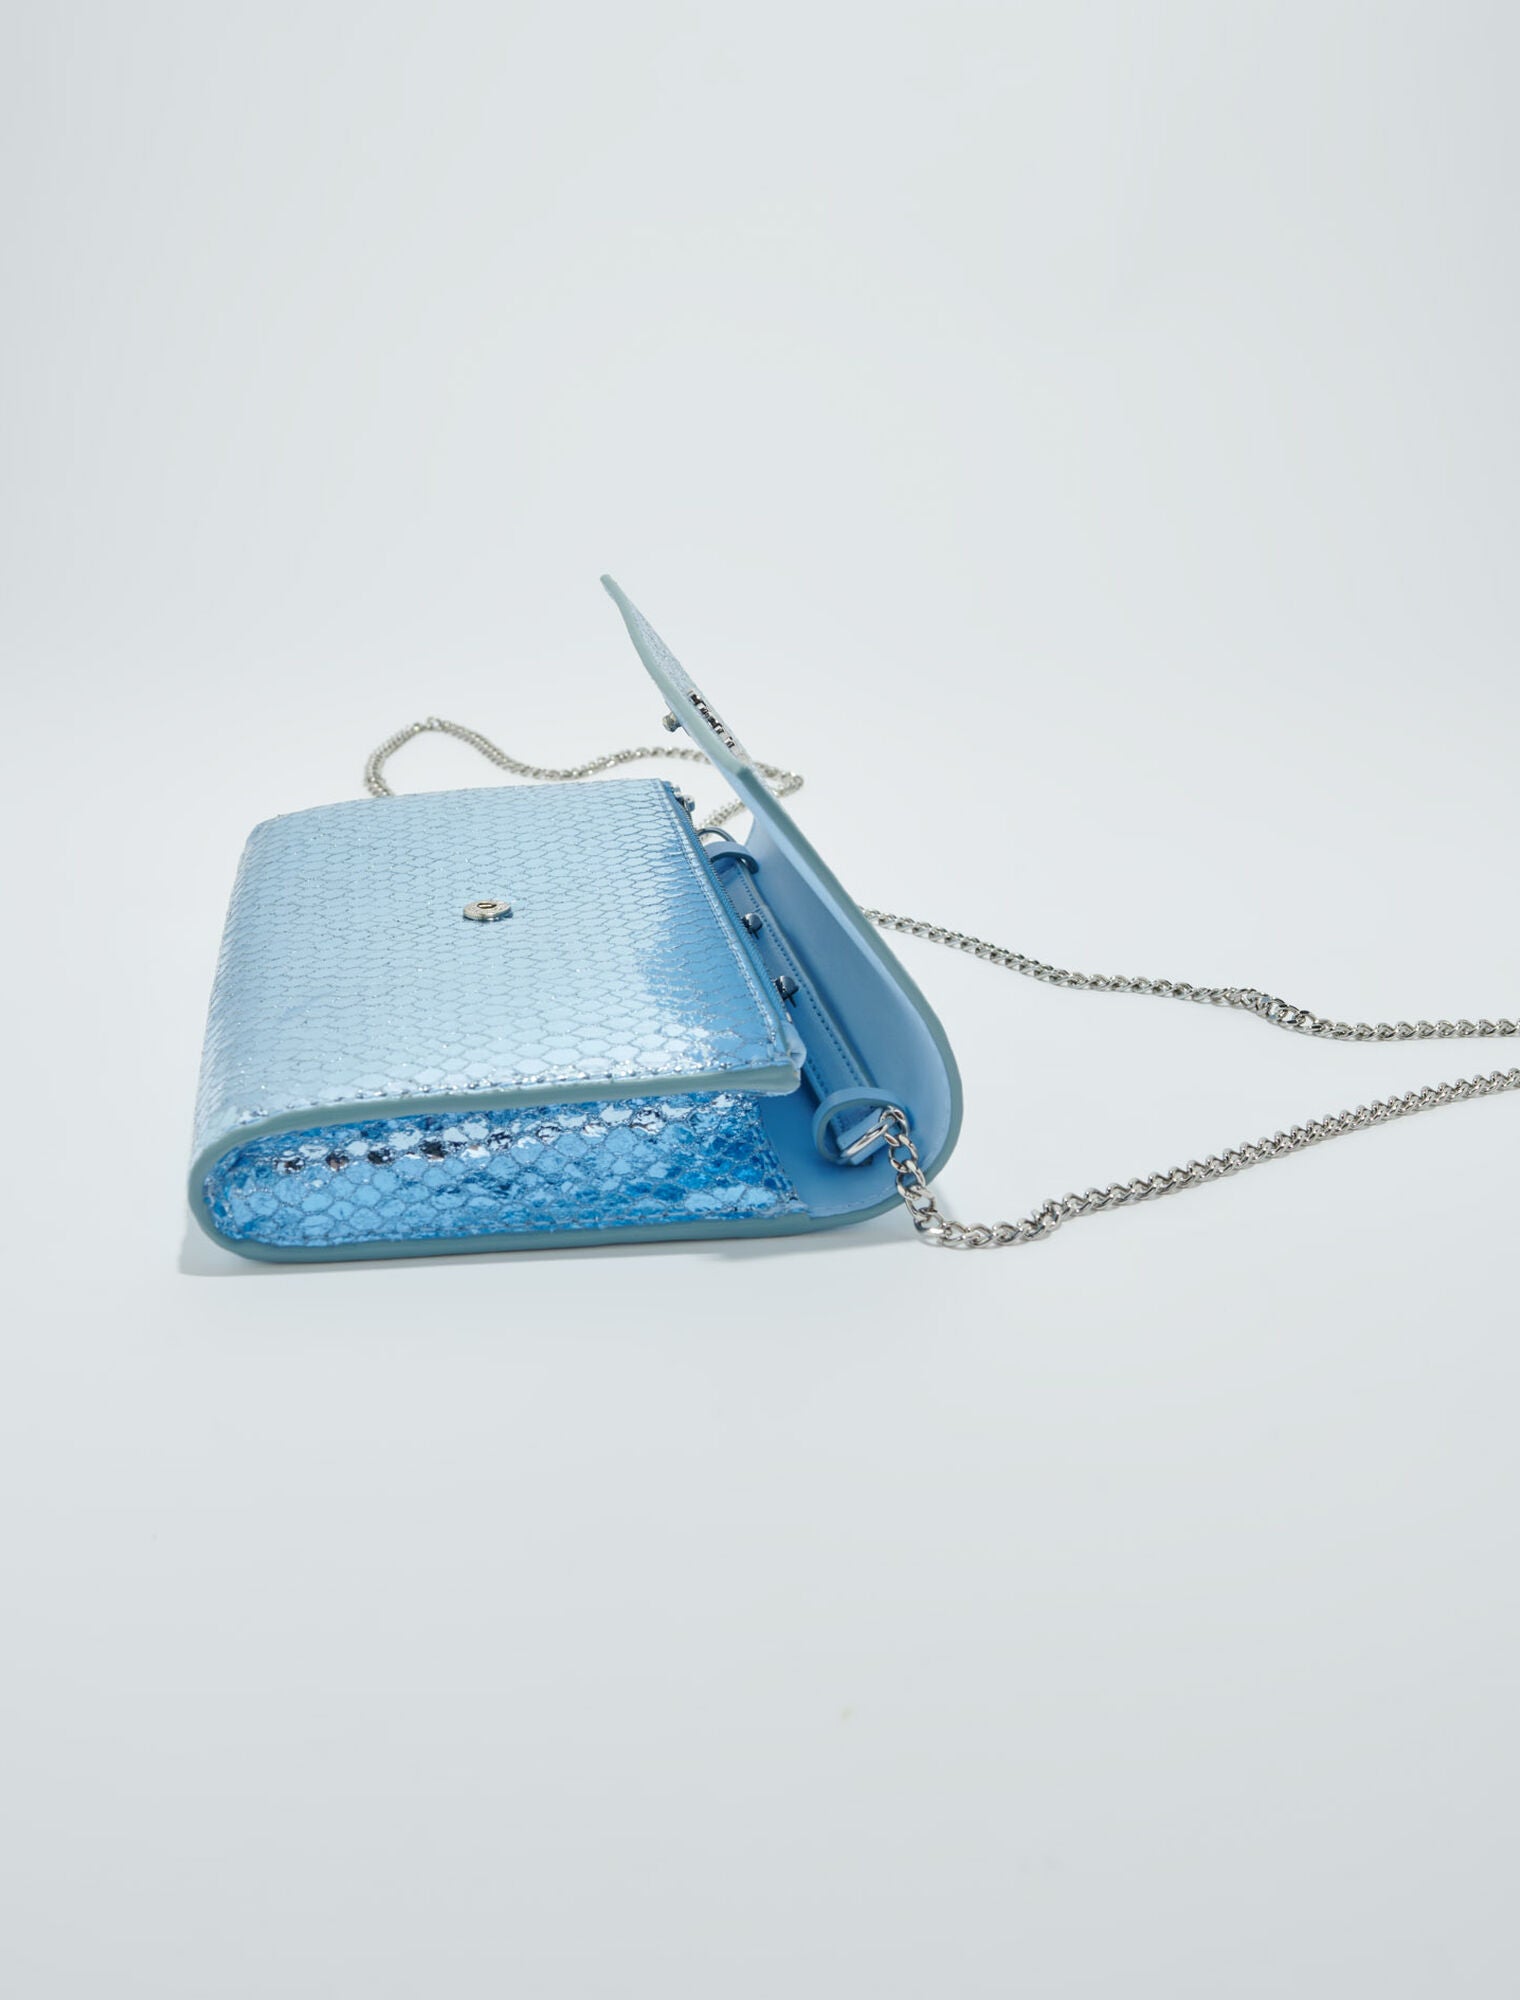 Light Blue-Mock croc leather clutch bag